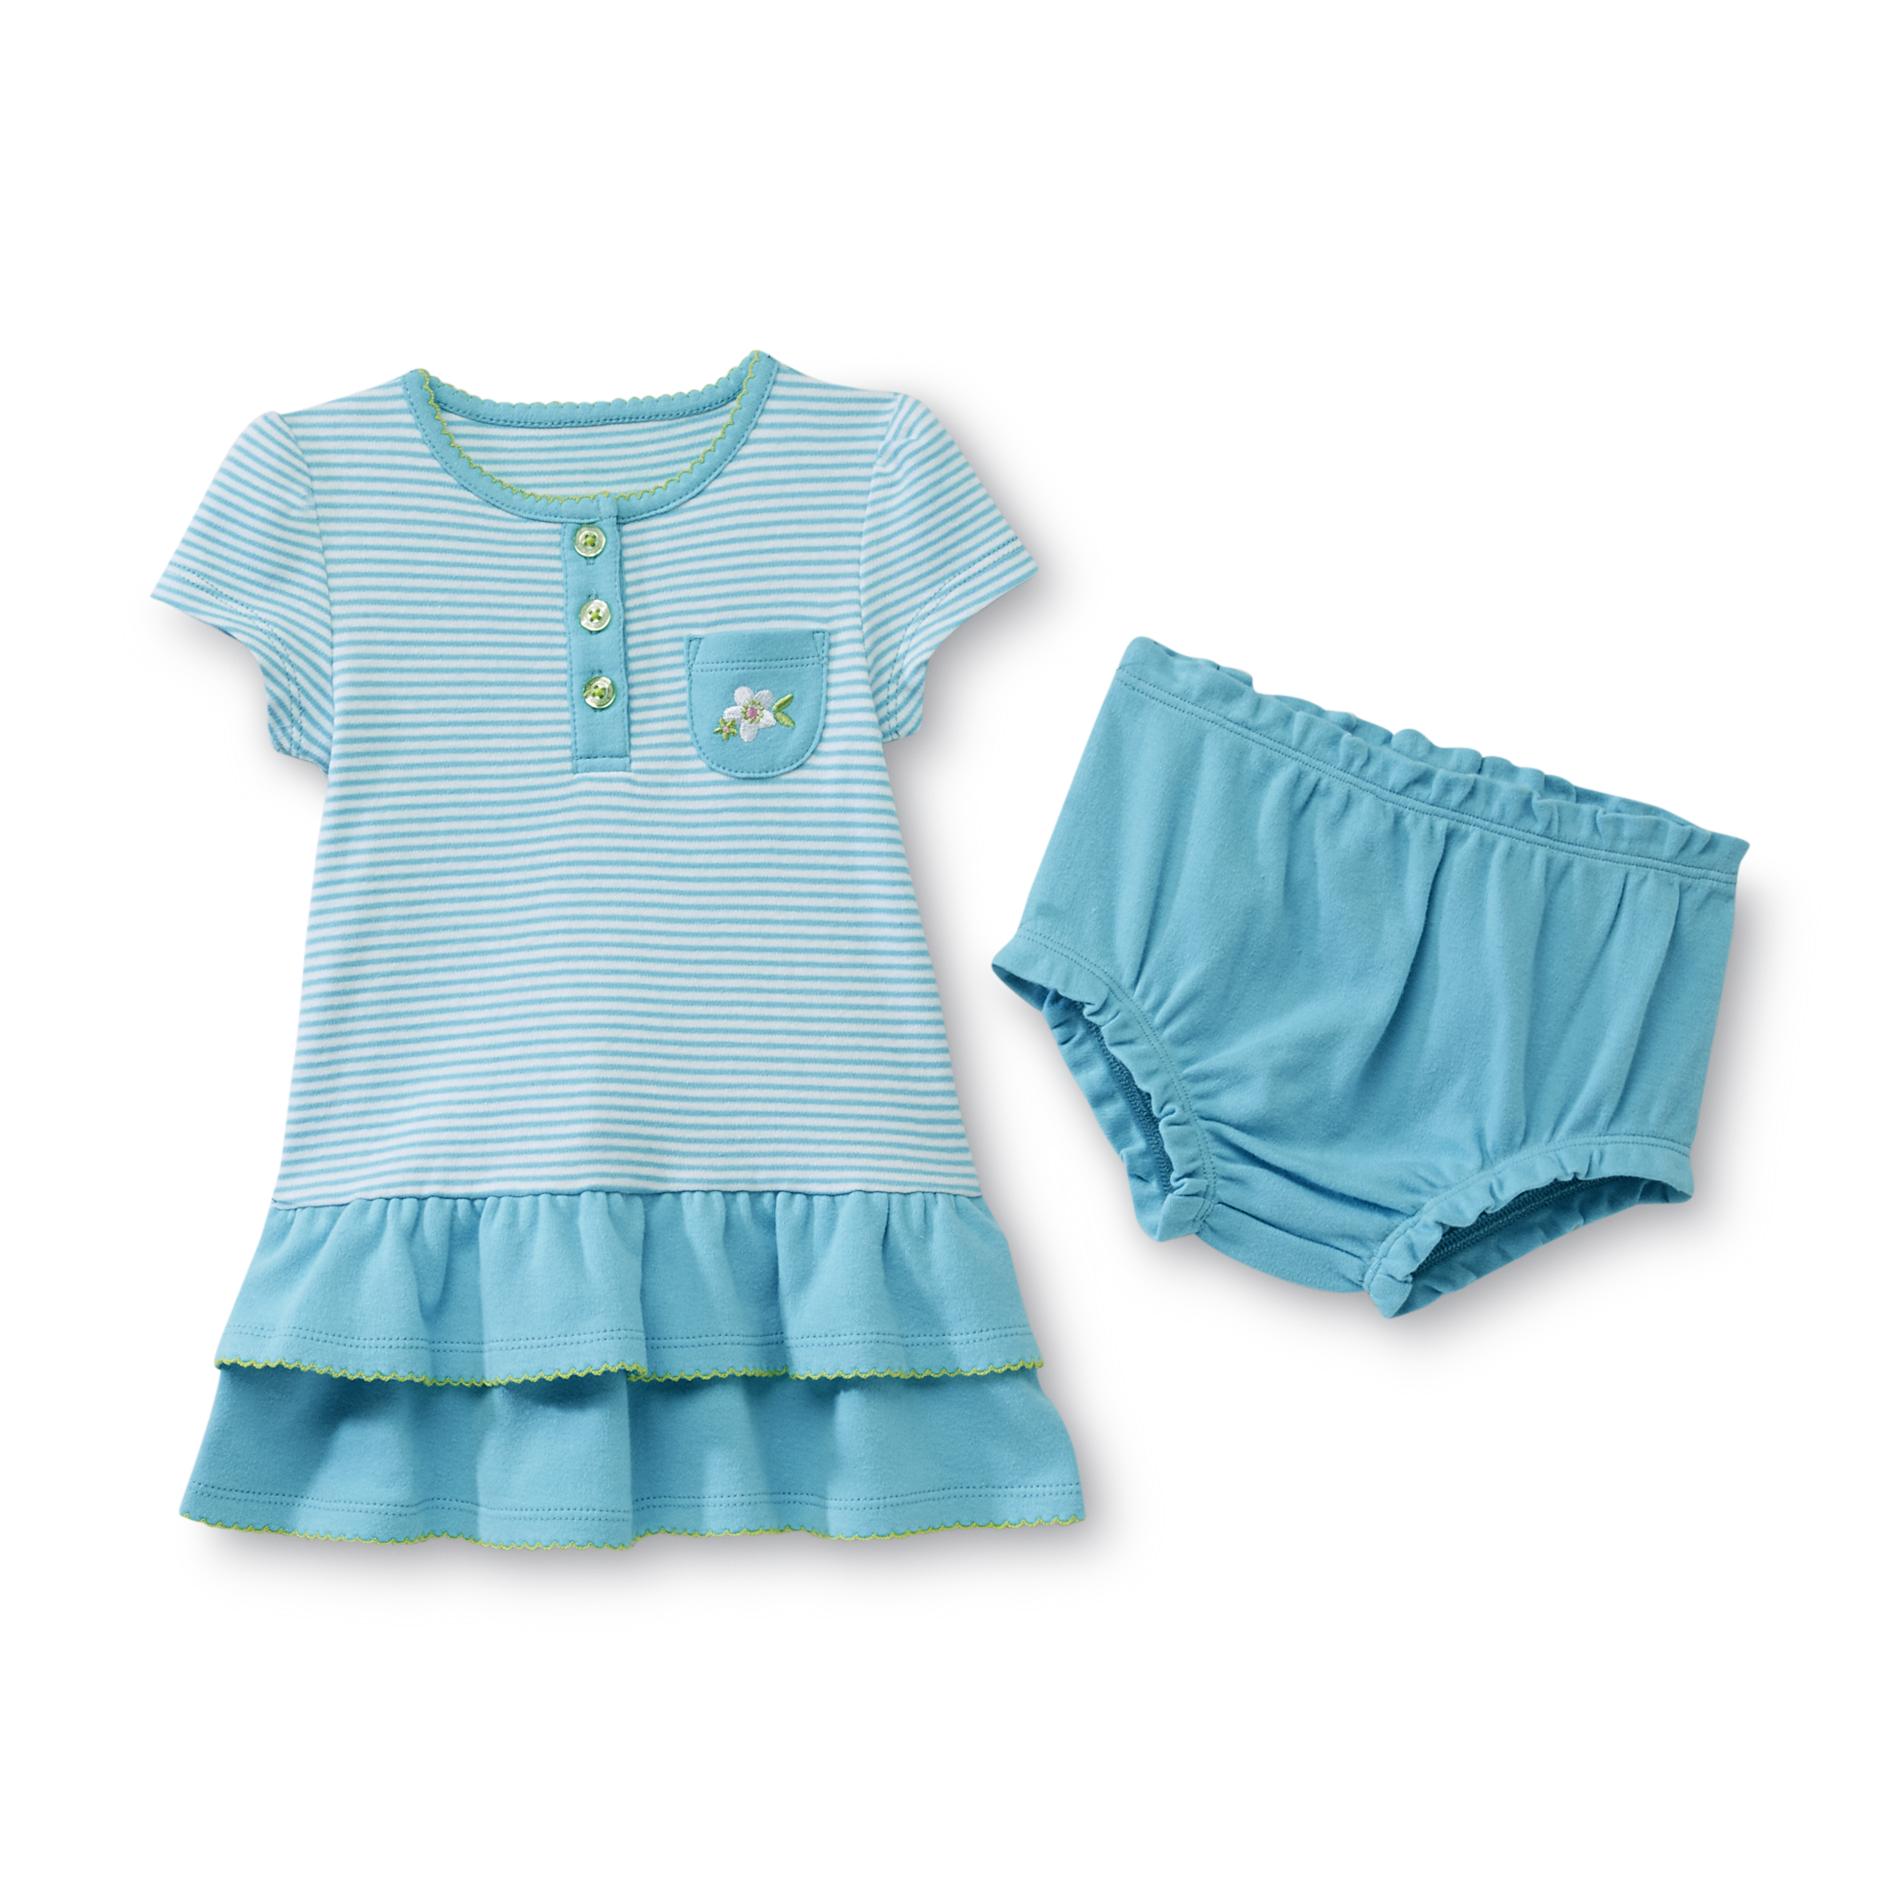 Small Wonders Newborn Girl's Dress & Diaper Cover - Striped